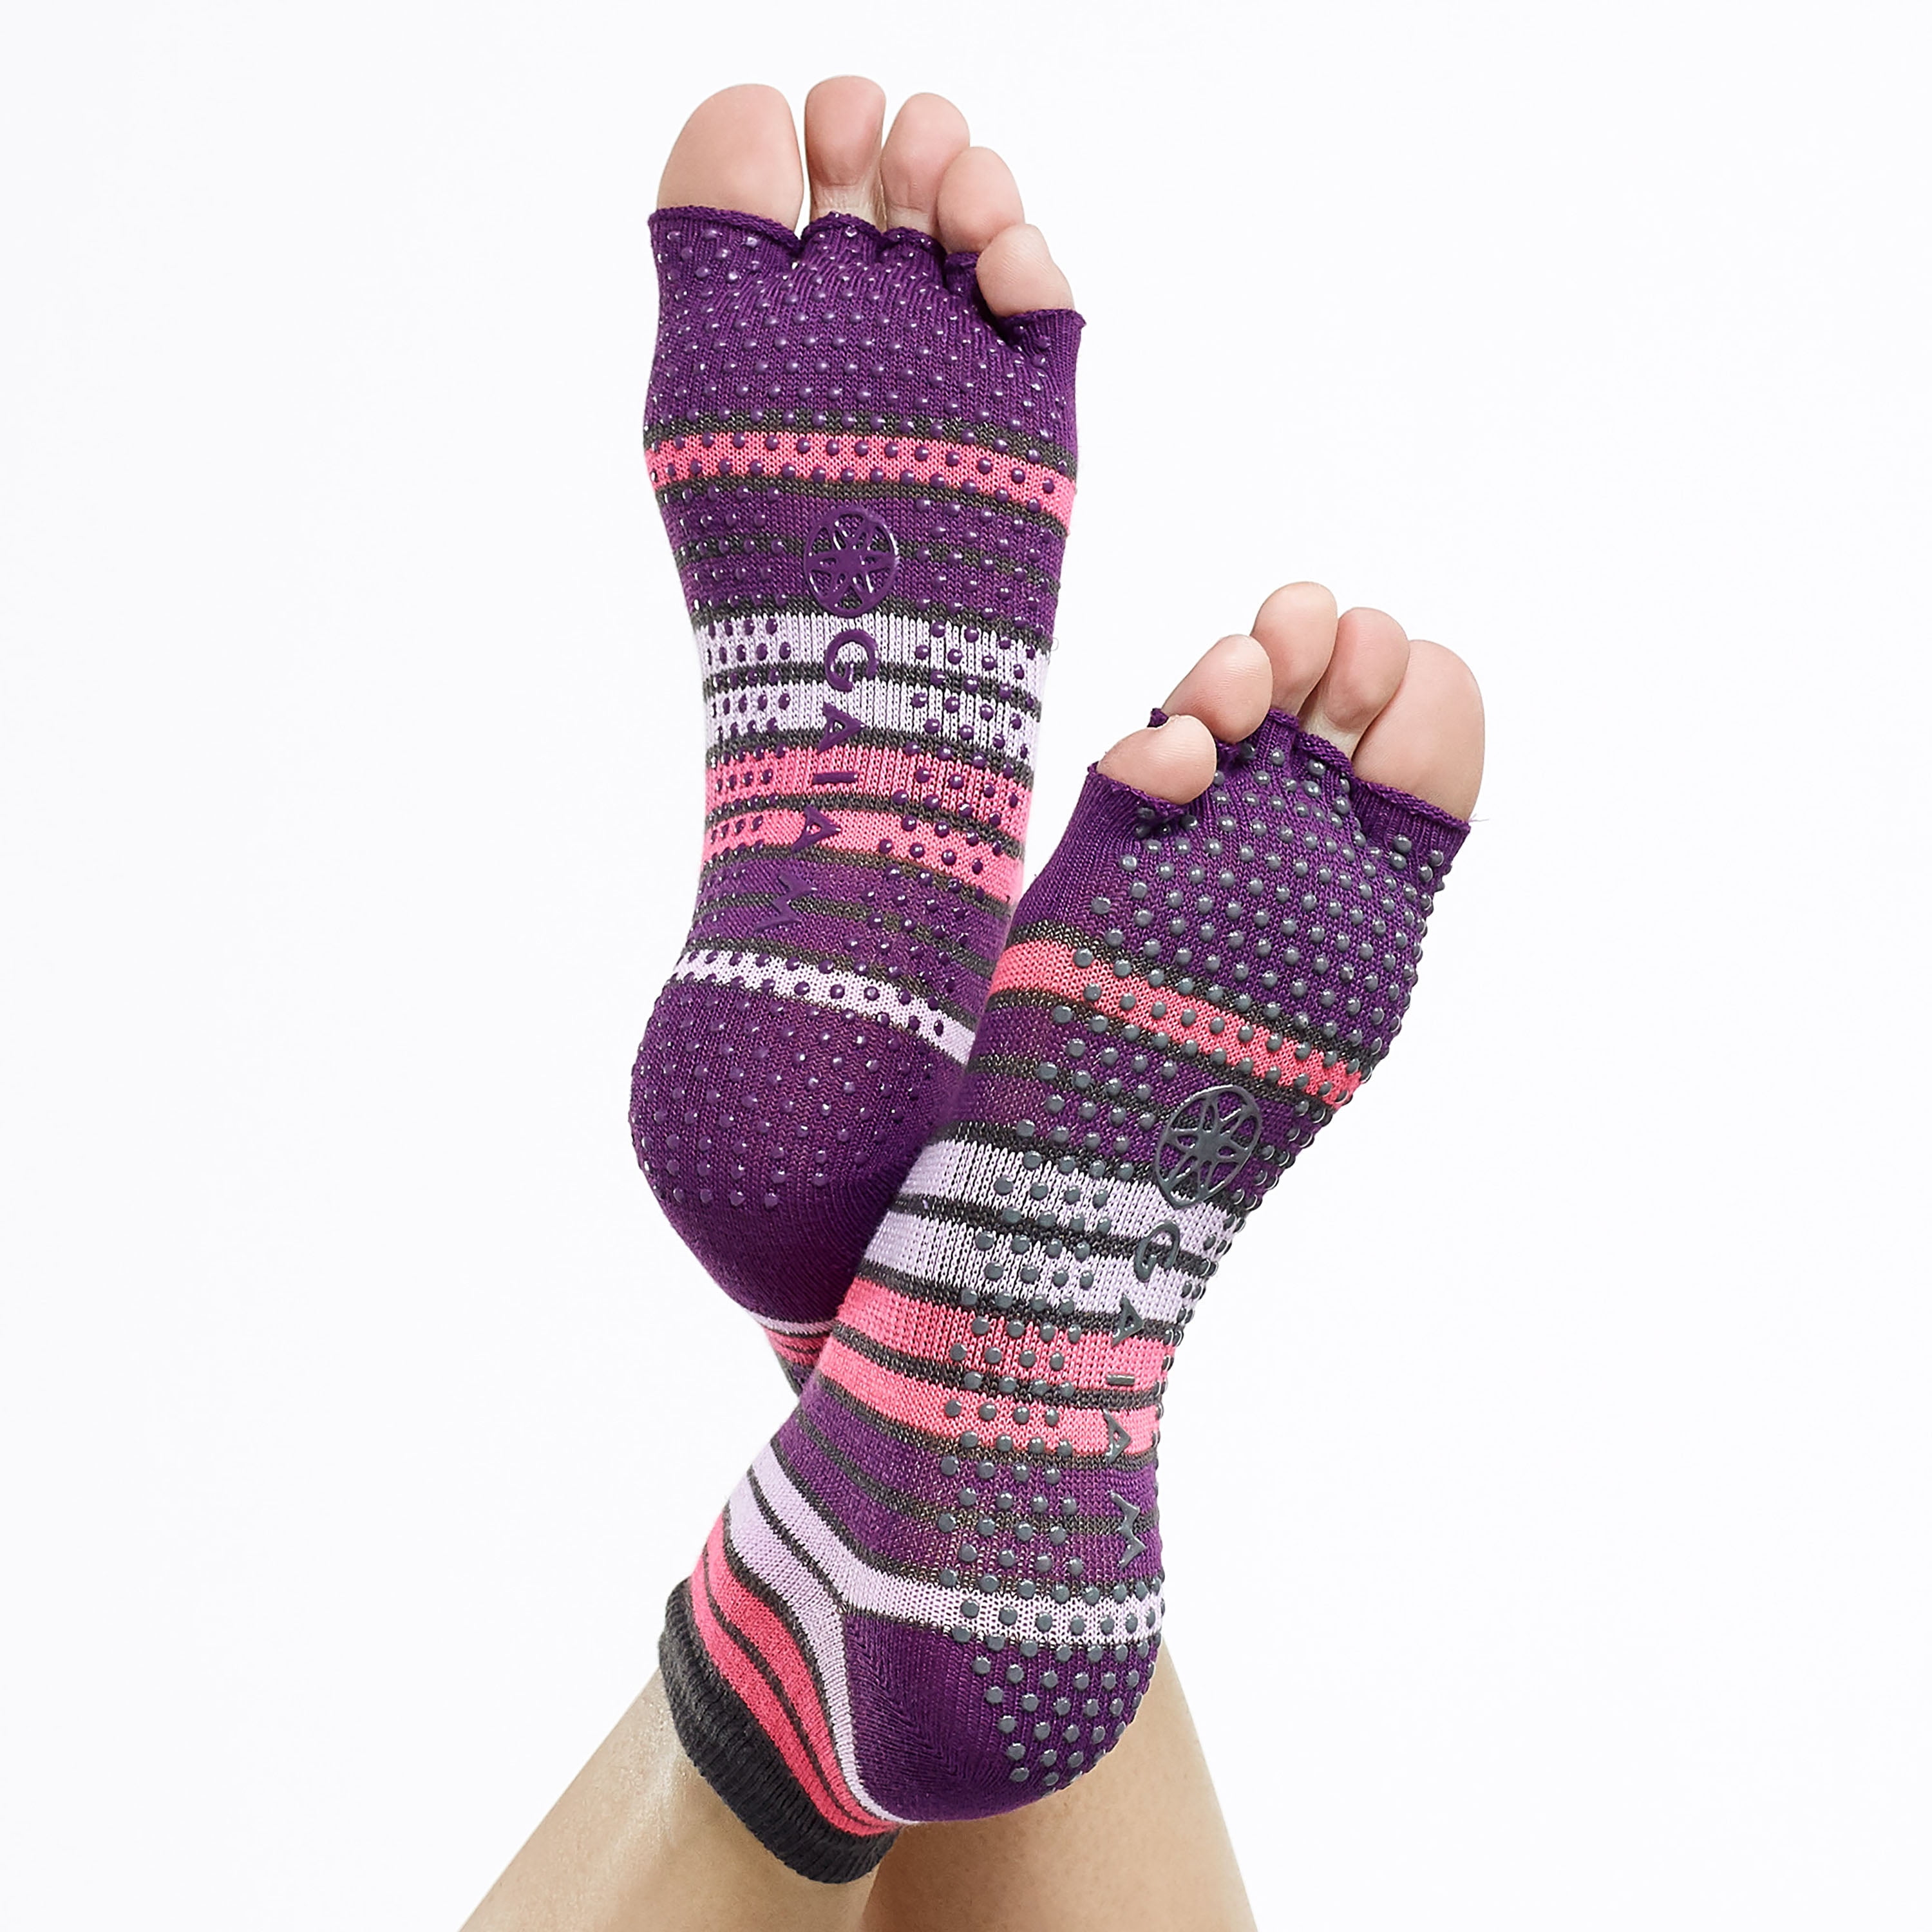 XEXYMIX Yoga Socks ‼️ ▫️ Great Yoga Toe Socks that can be worn